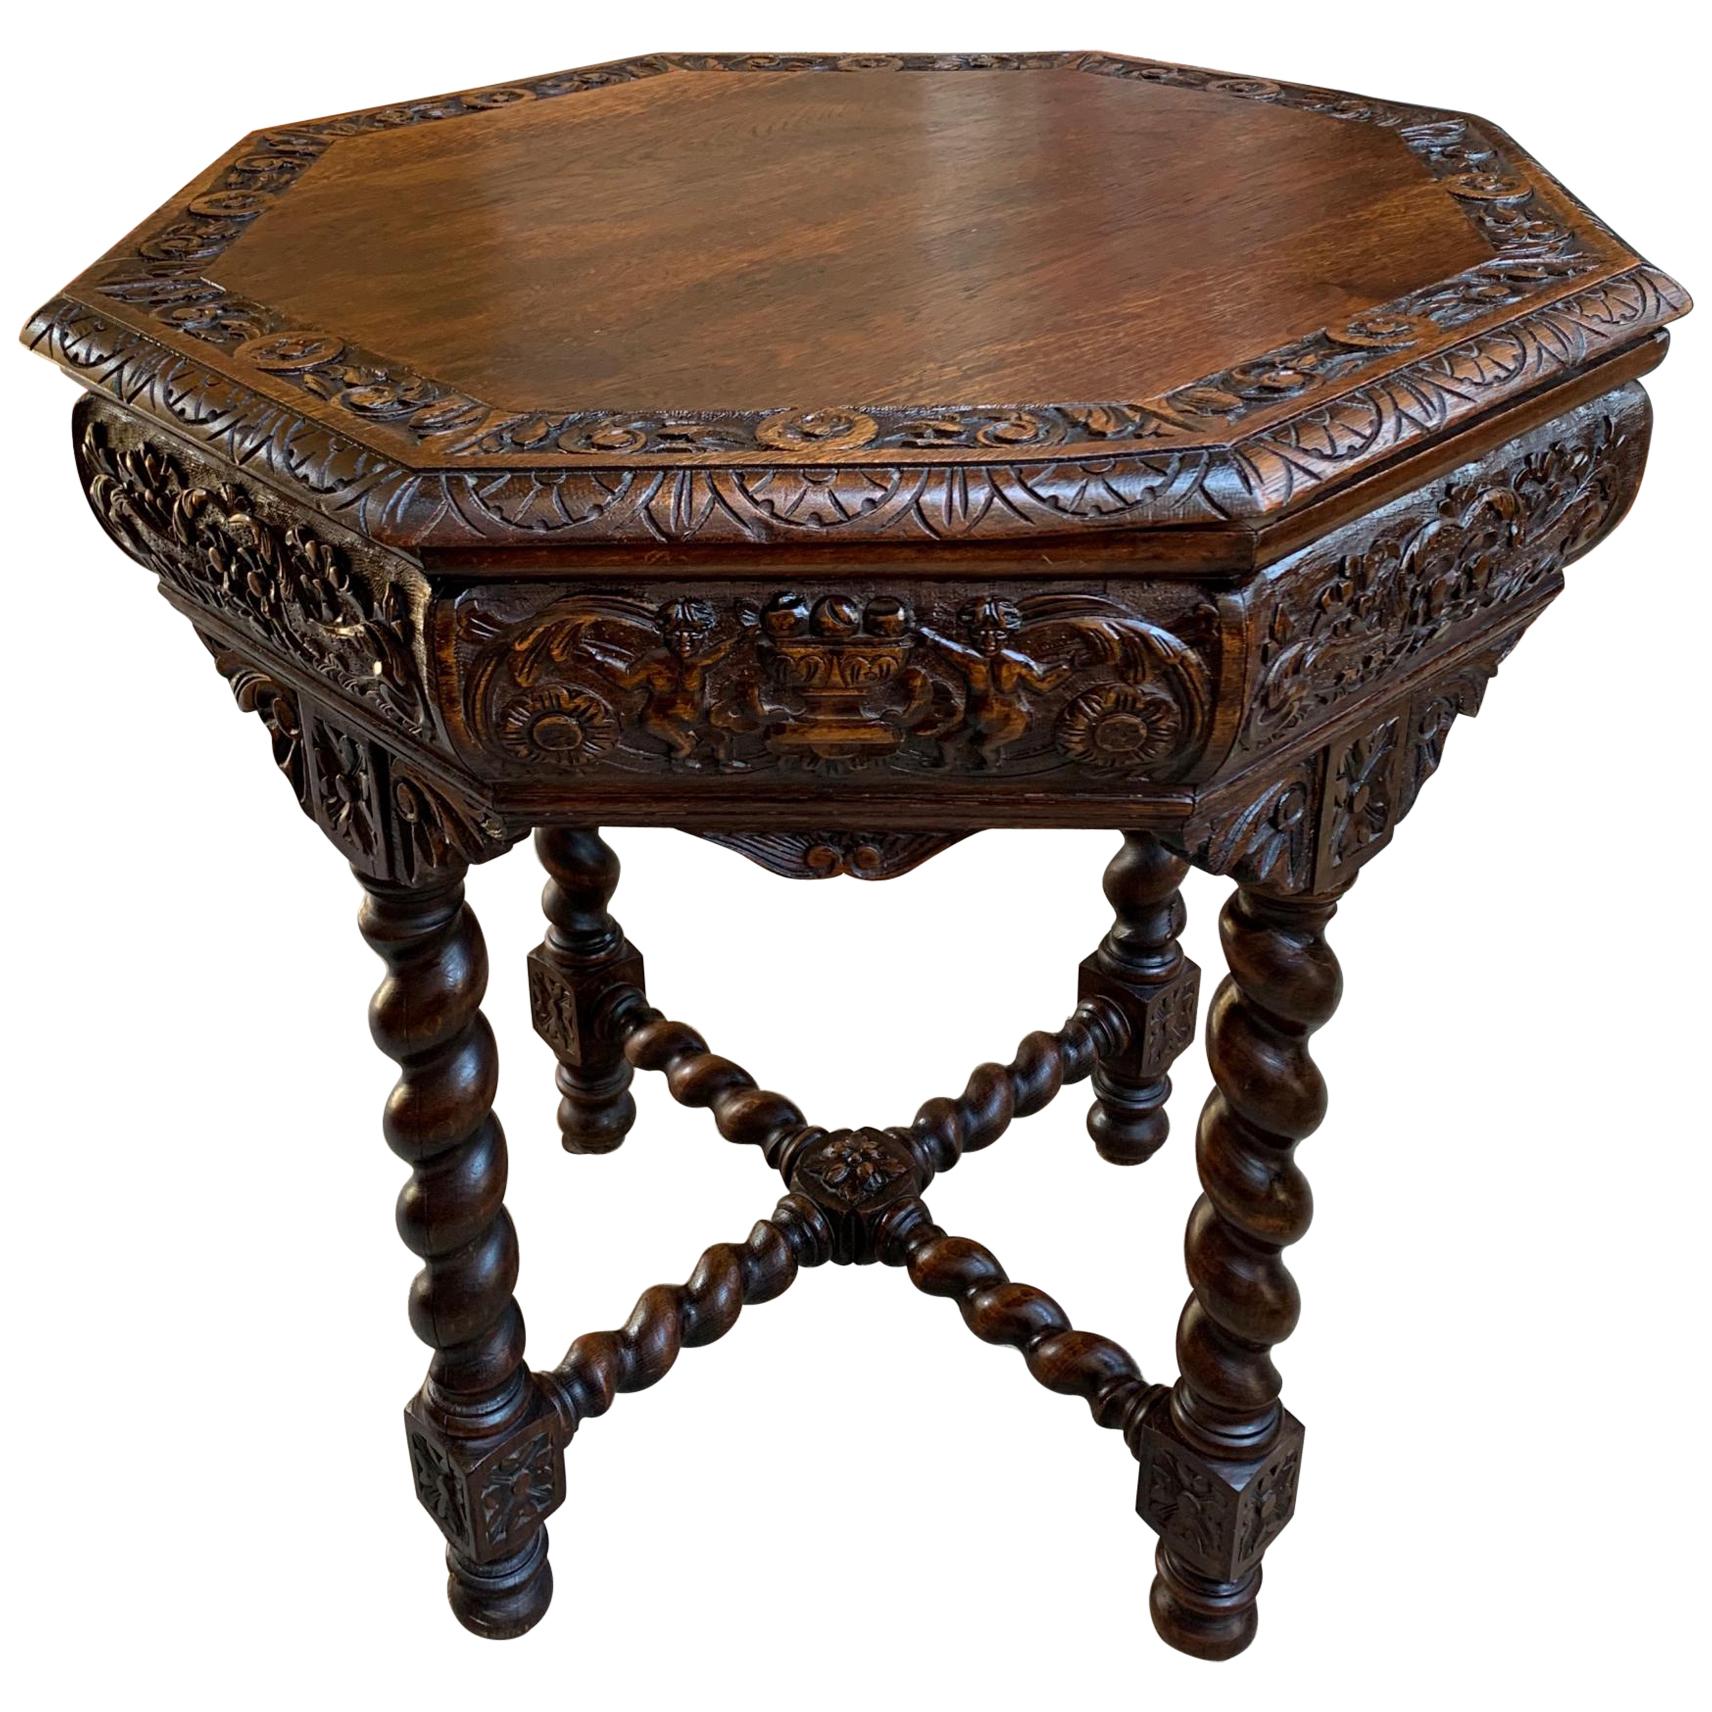 Antique French Octagon TABLE BARLEY TWIST Carved Oak Center Sofa Renaissance